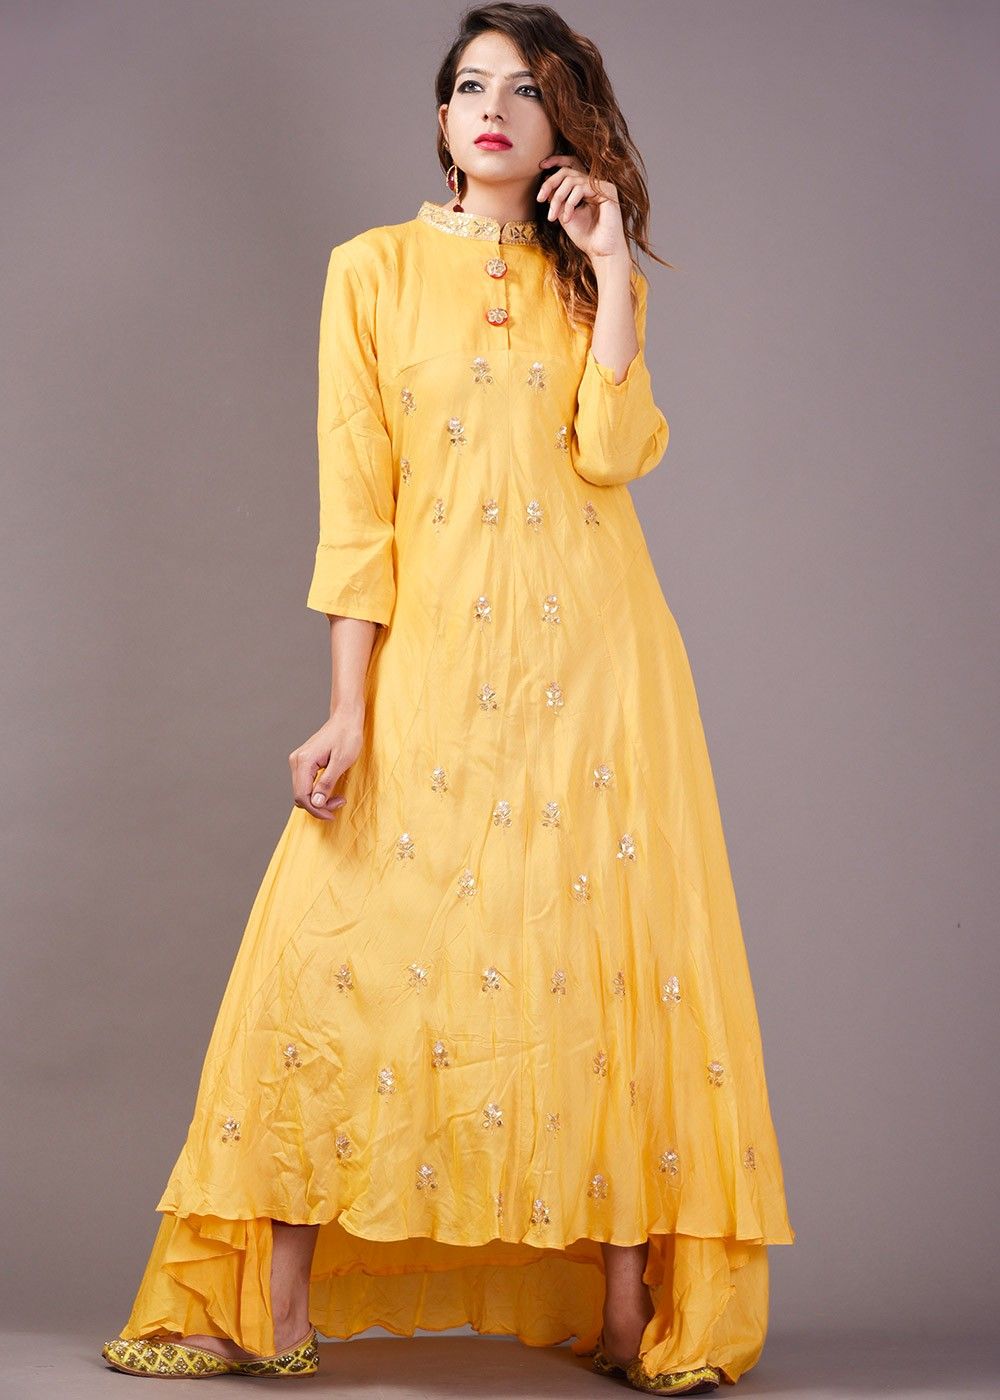 yellow western dress